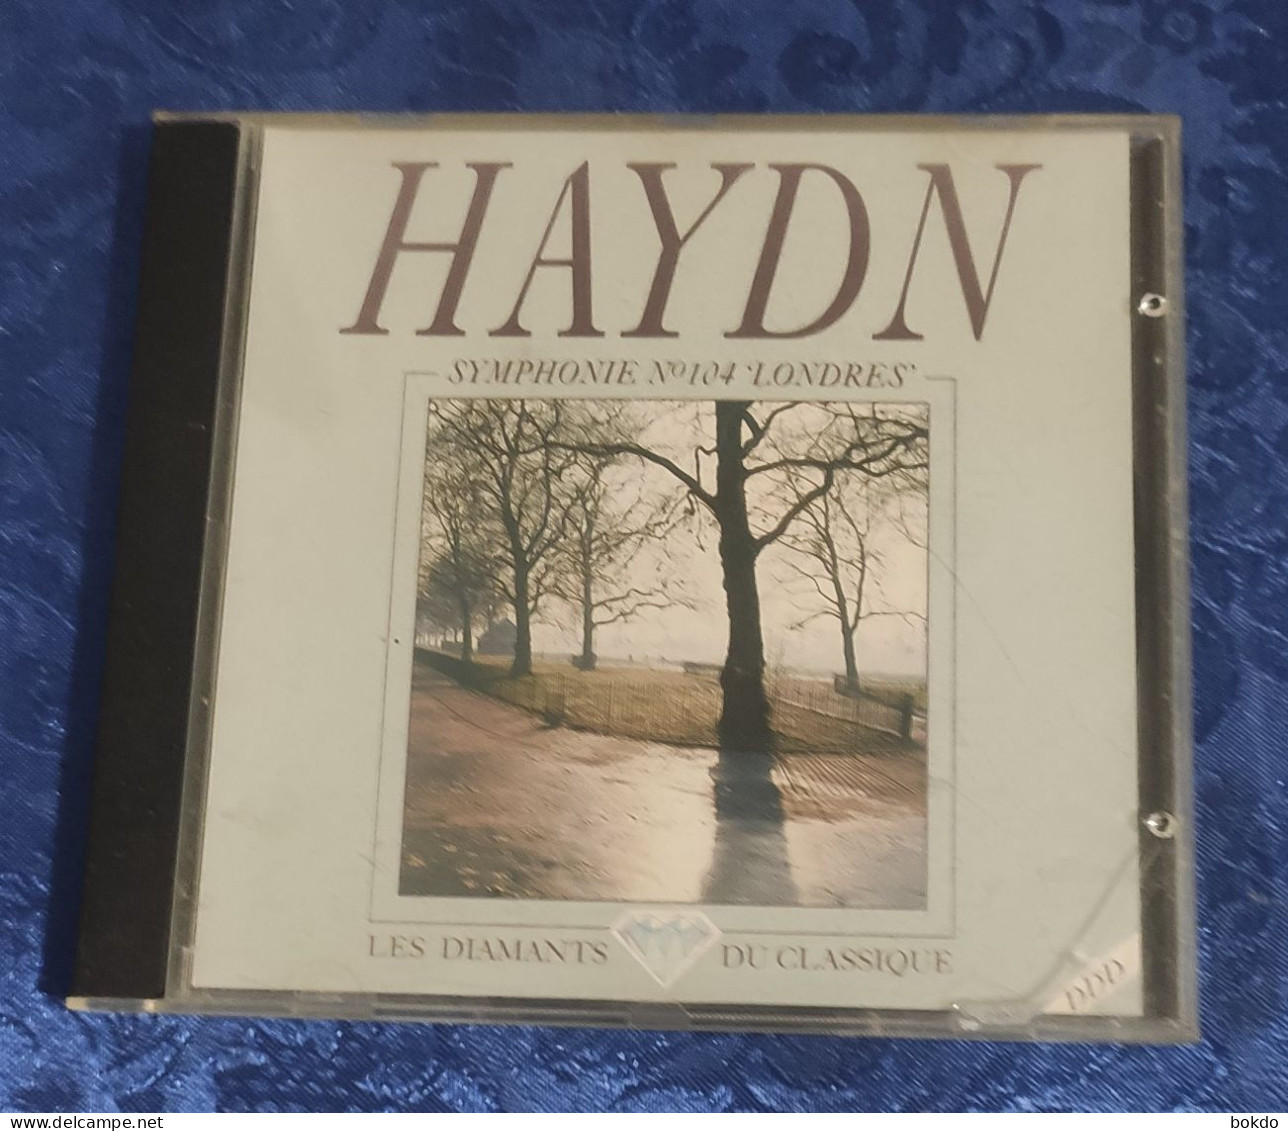 HAYDN - Symphonie N° 104 "londres" - Classical